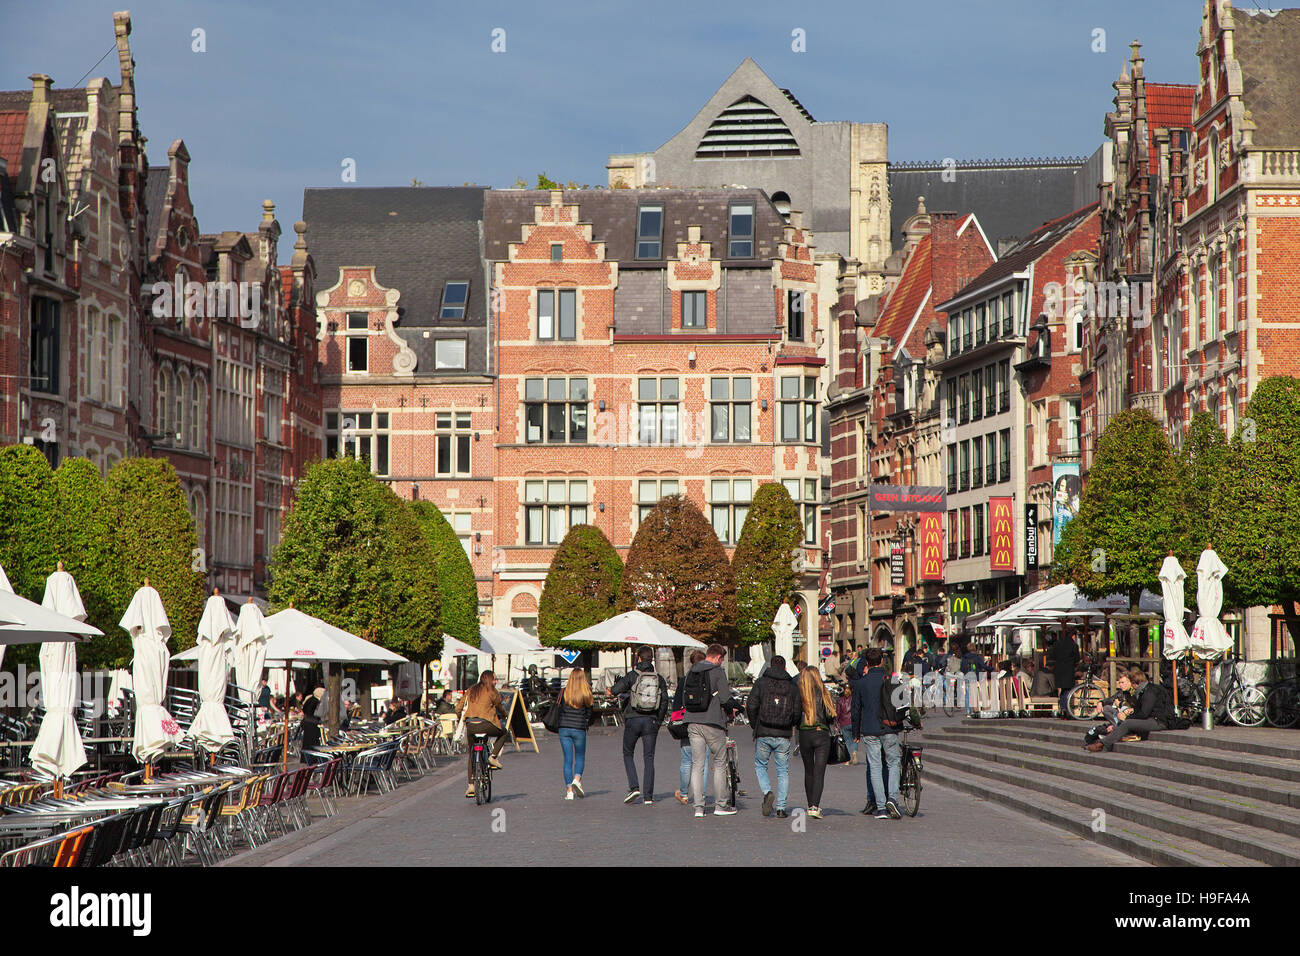 The Oude Markt (Old Market Square) in Leuven, Belgium. Stock Photo